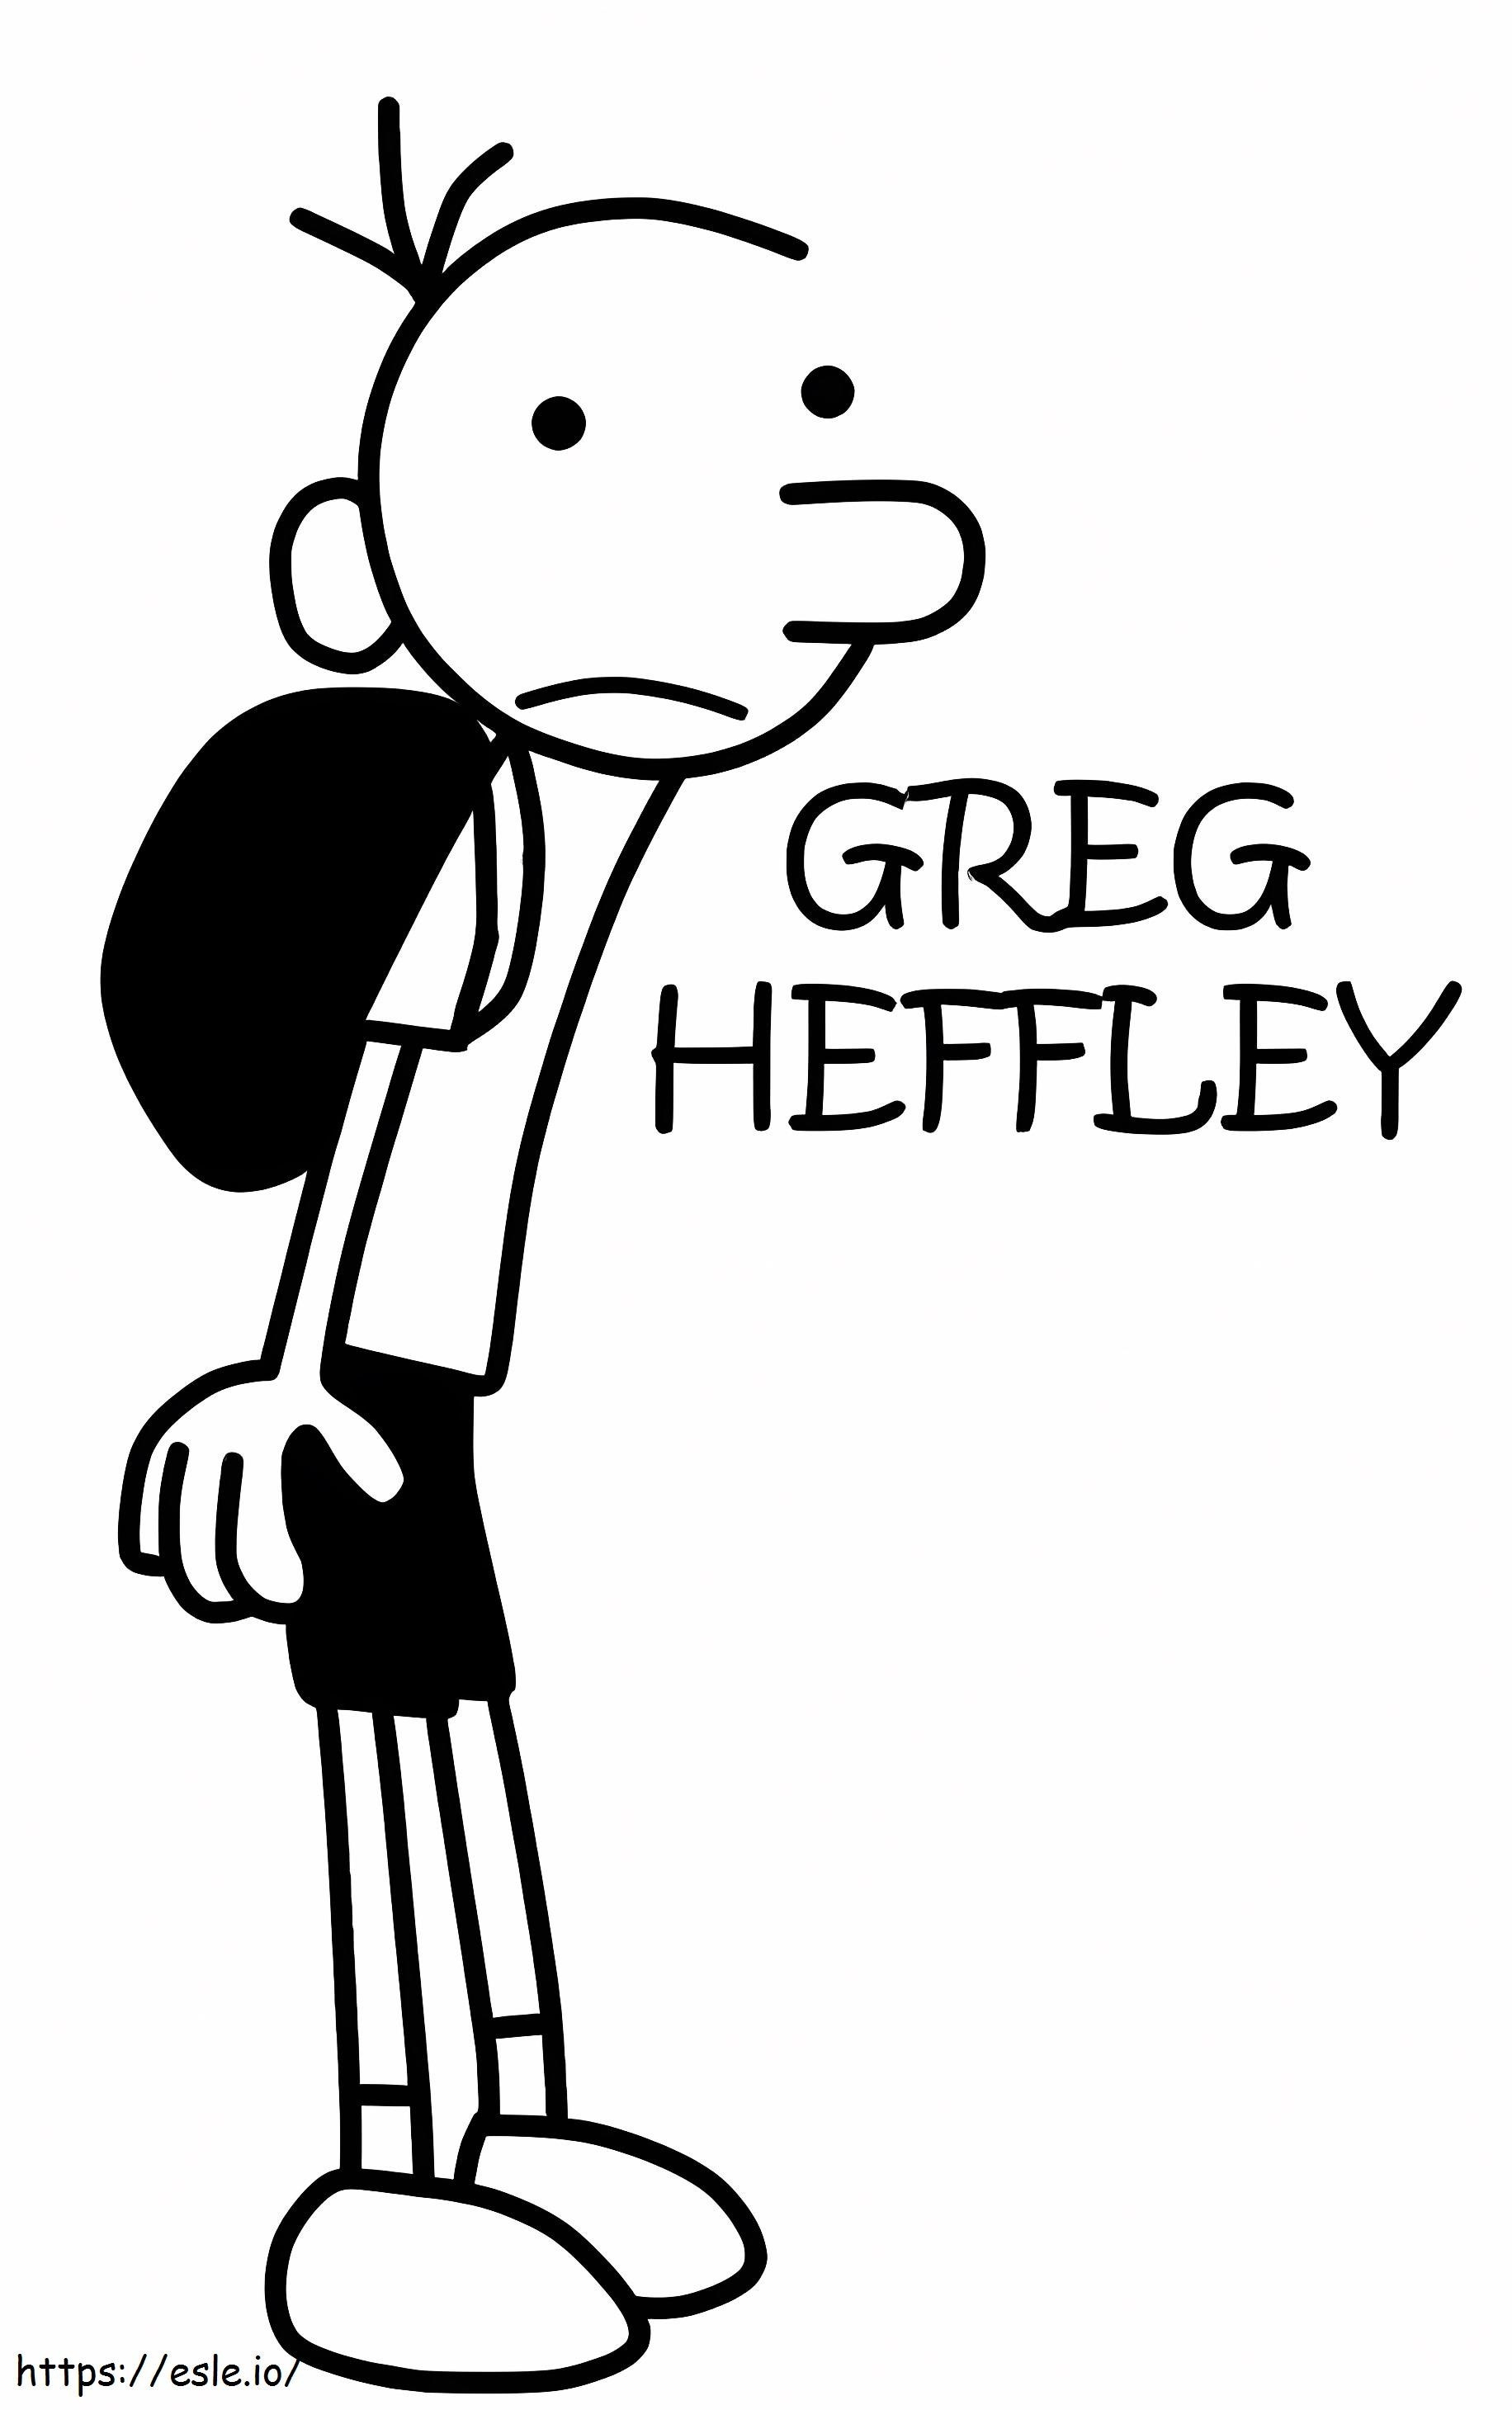 Greg Heffley coloring page